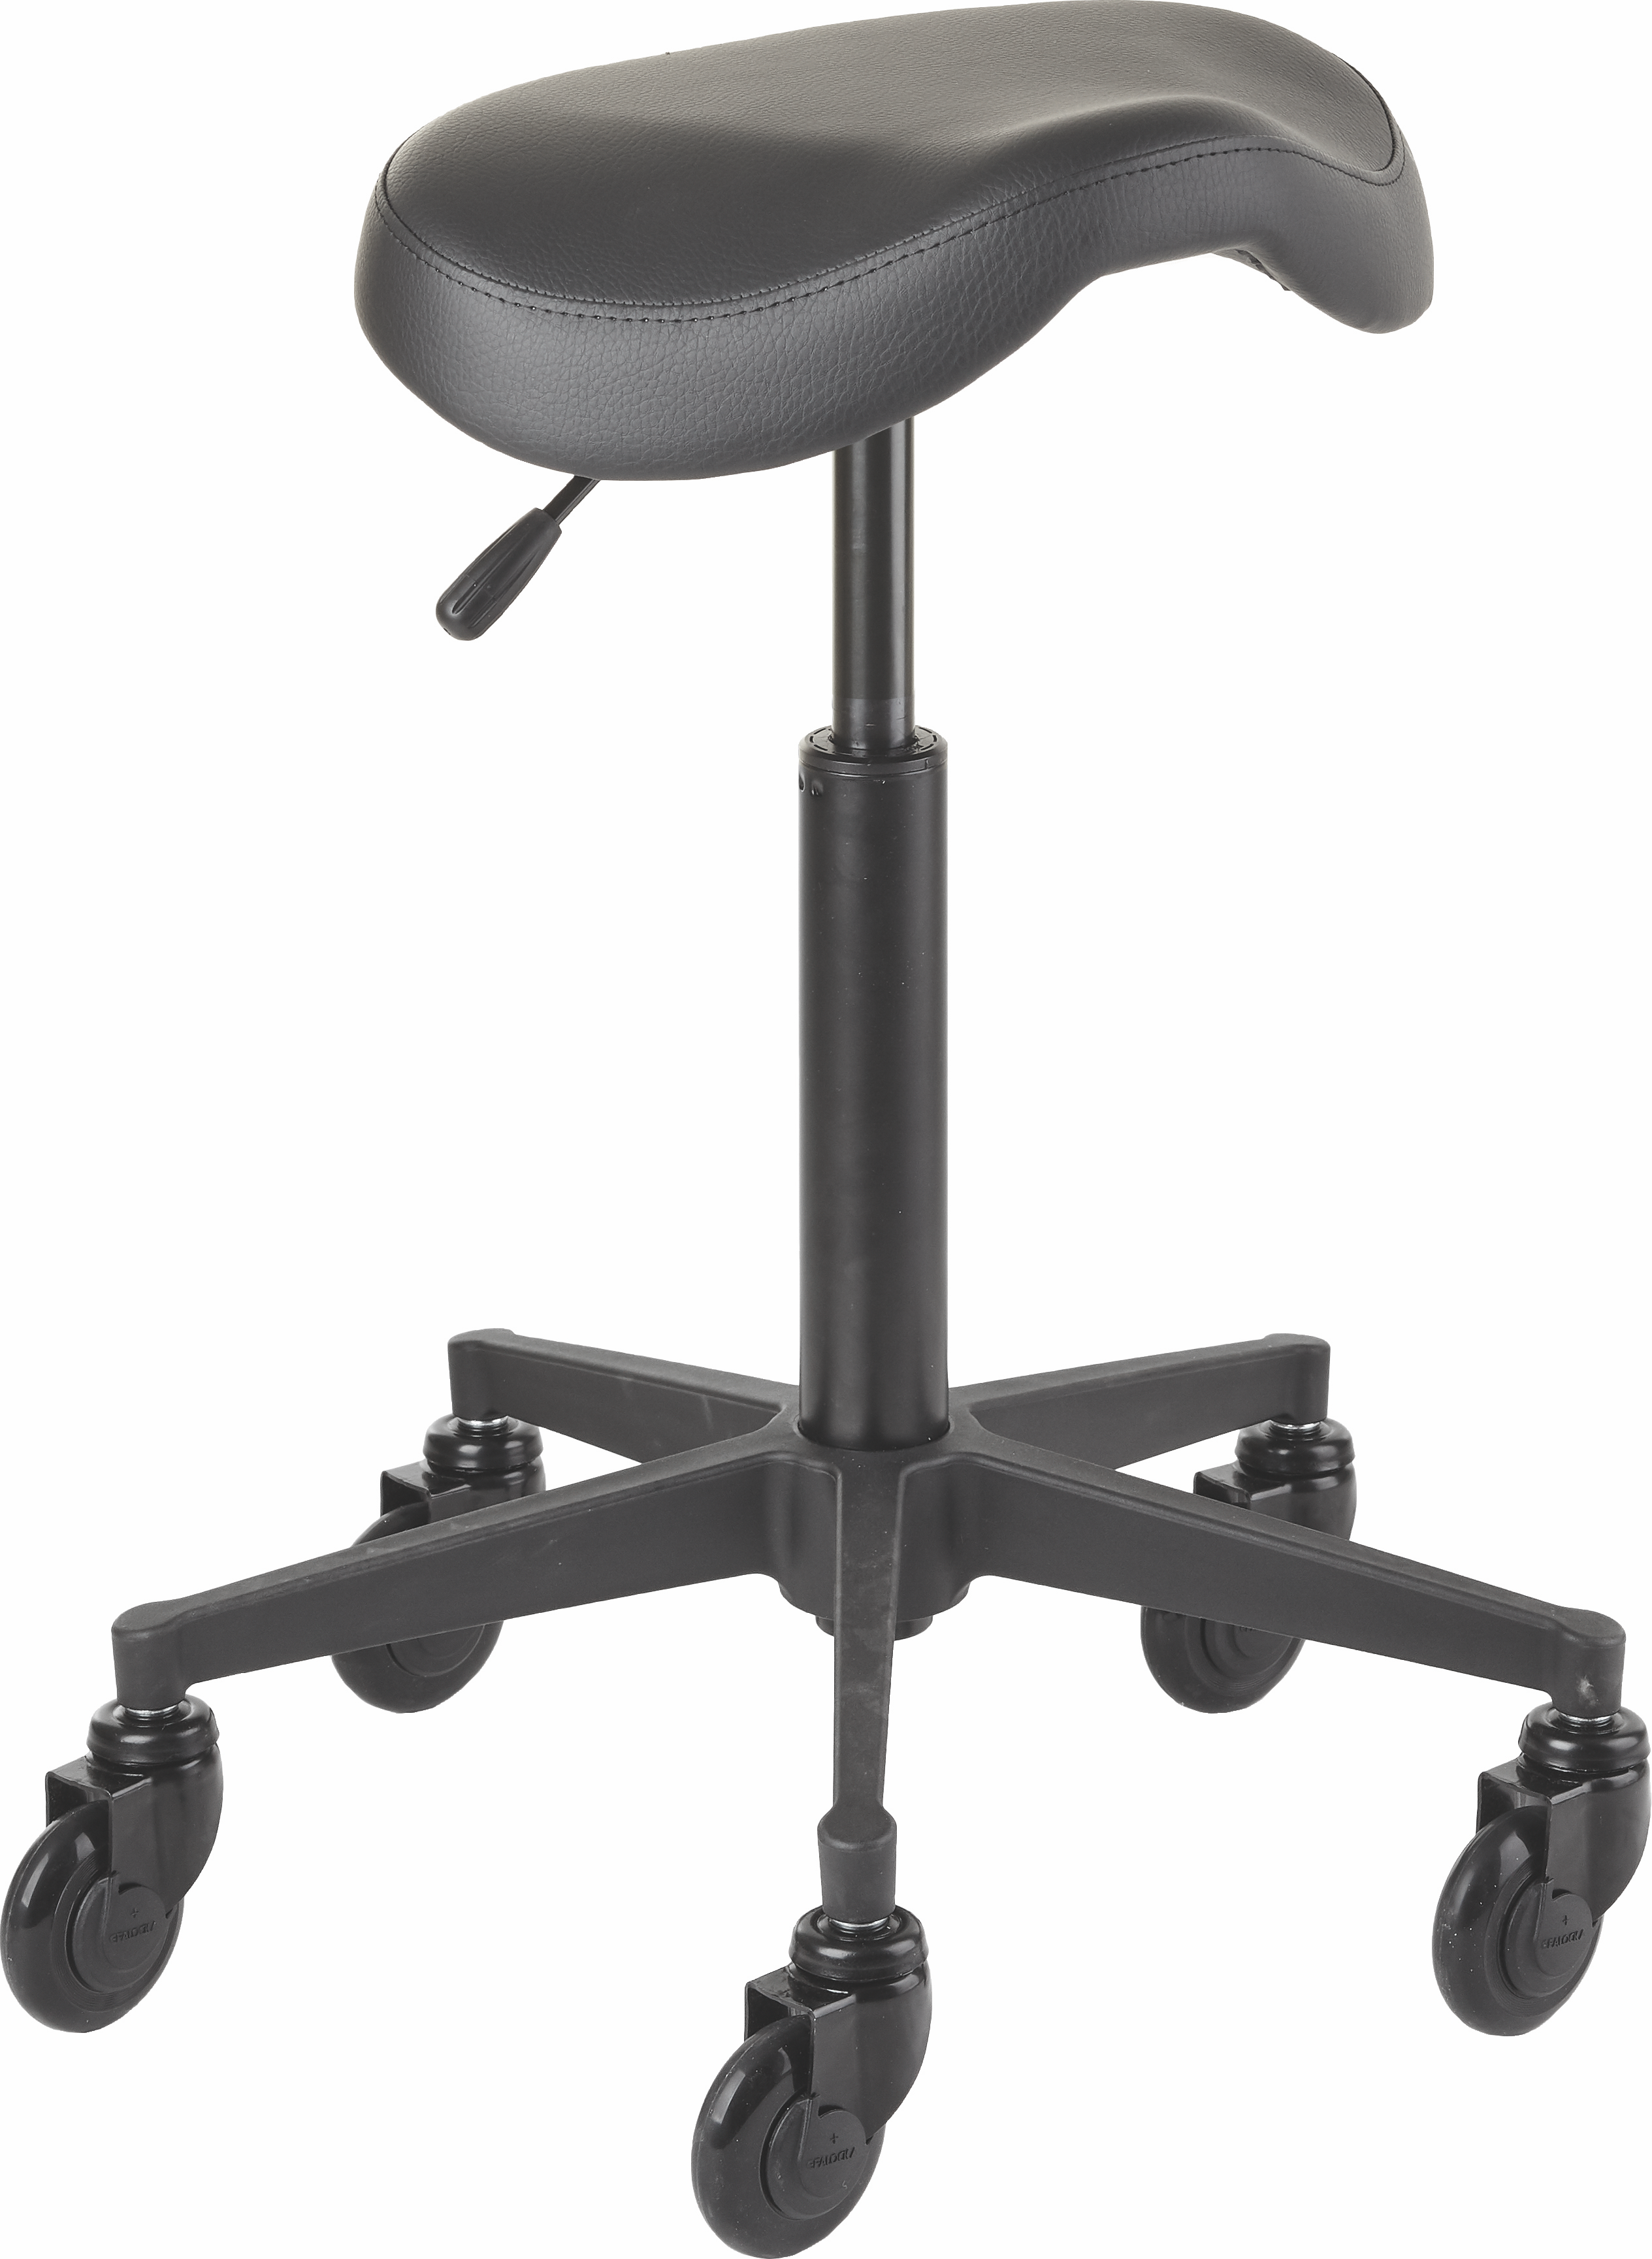 CLICTEC® SADDLE Roller stool